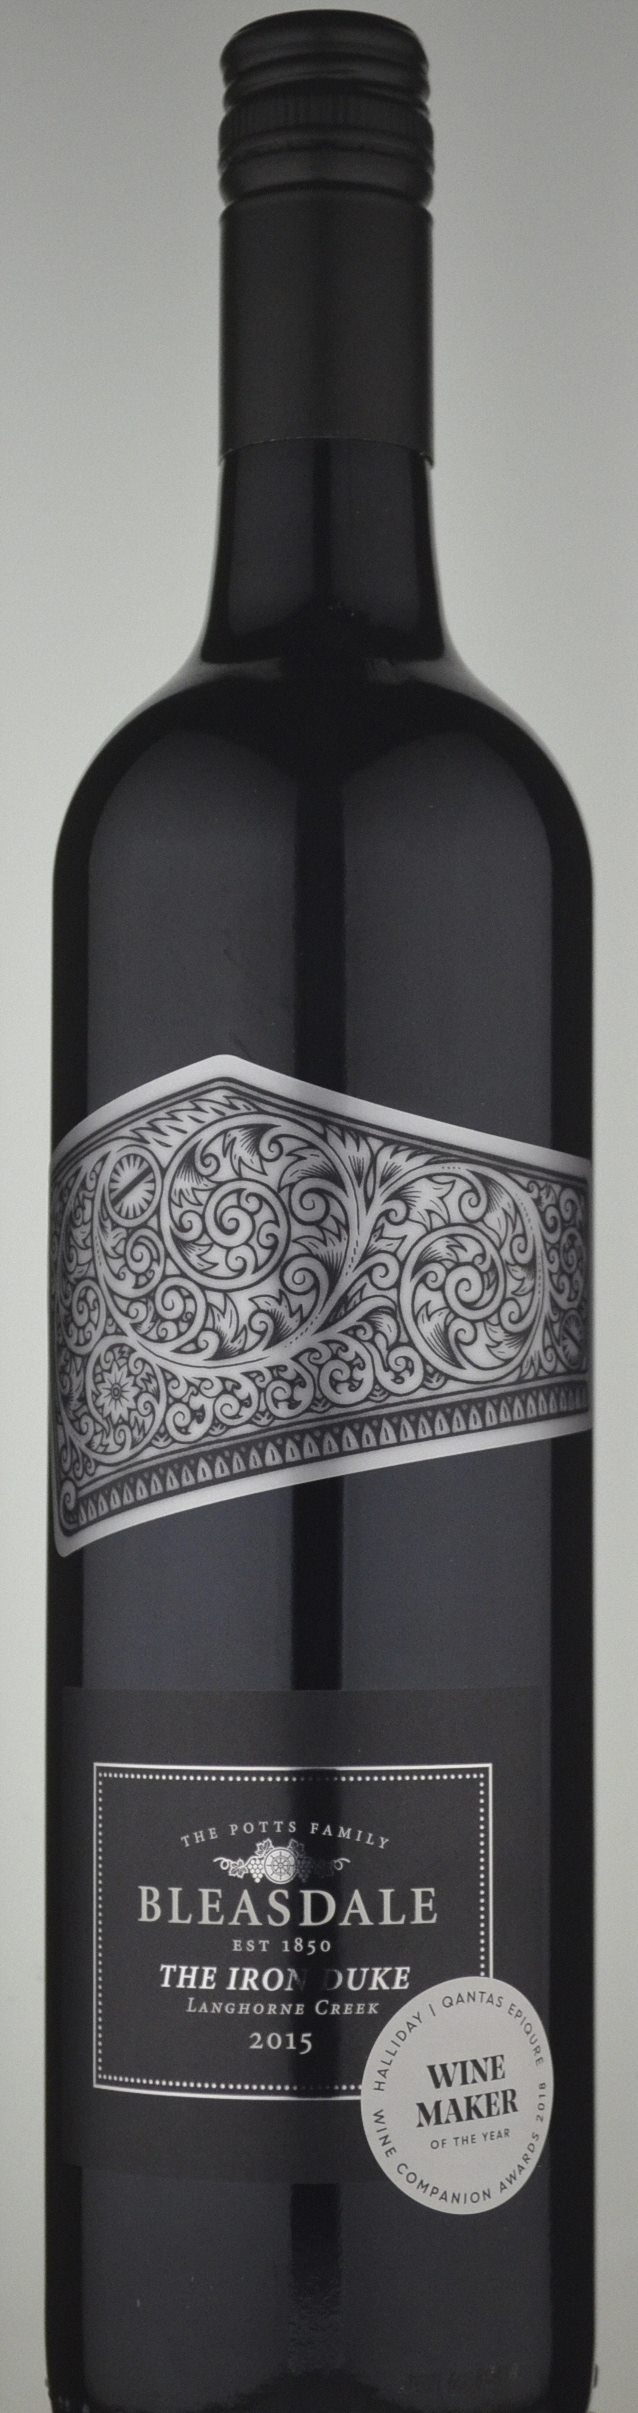 Bleasdale Vineyards The Iron Duke Cabernet Sauvignon 2015